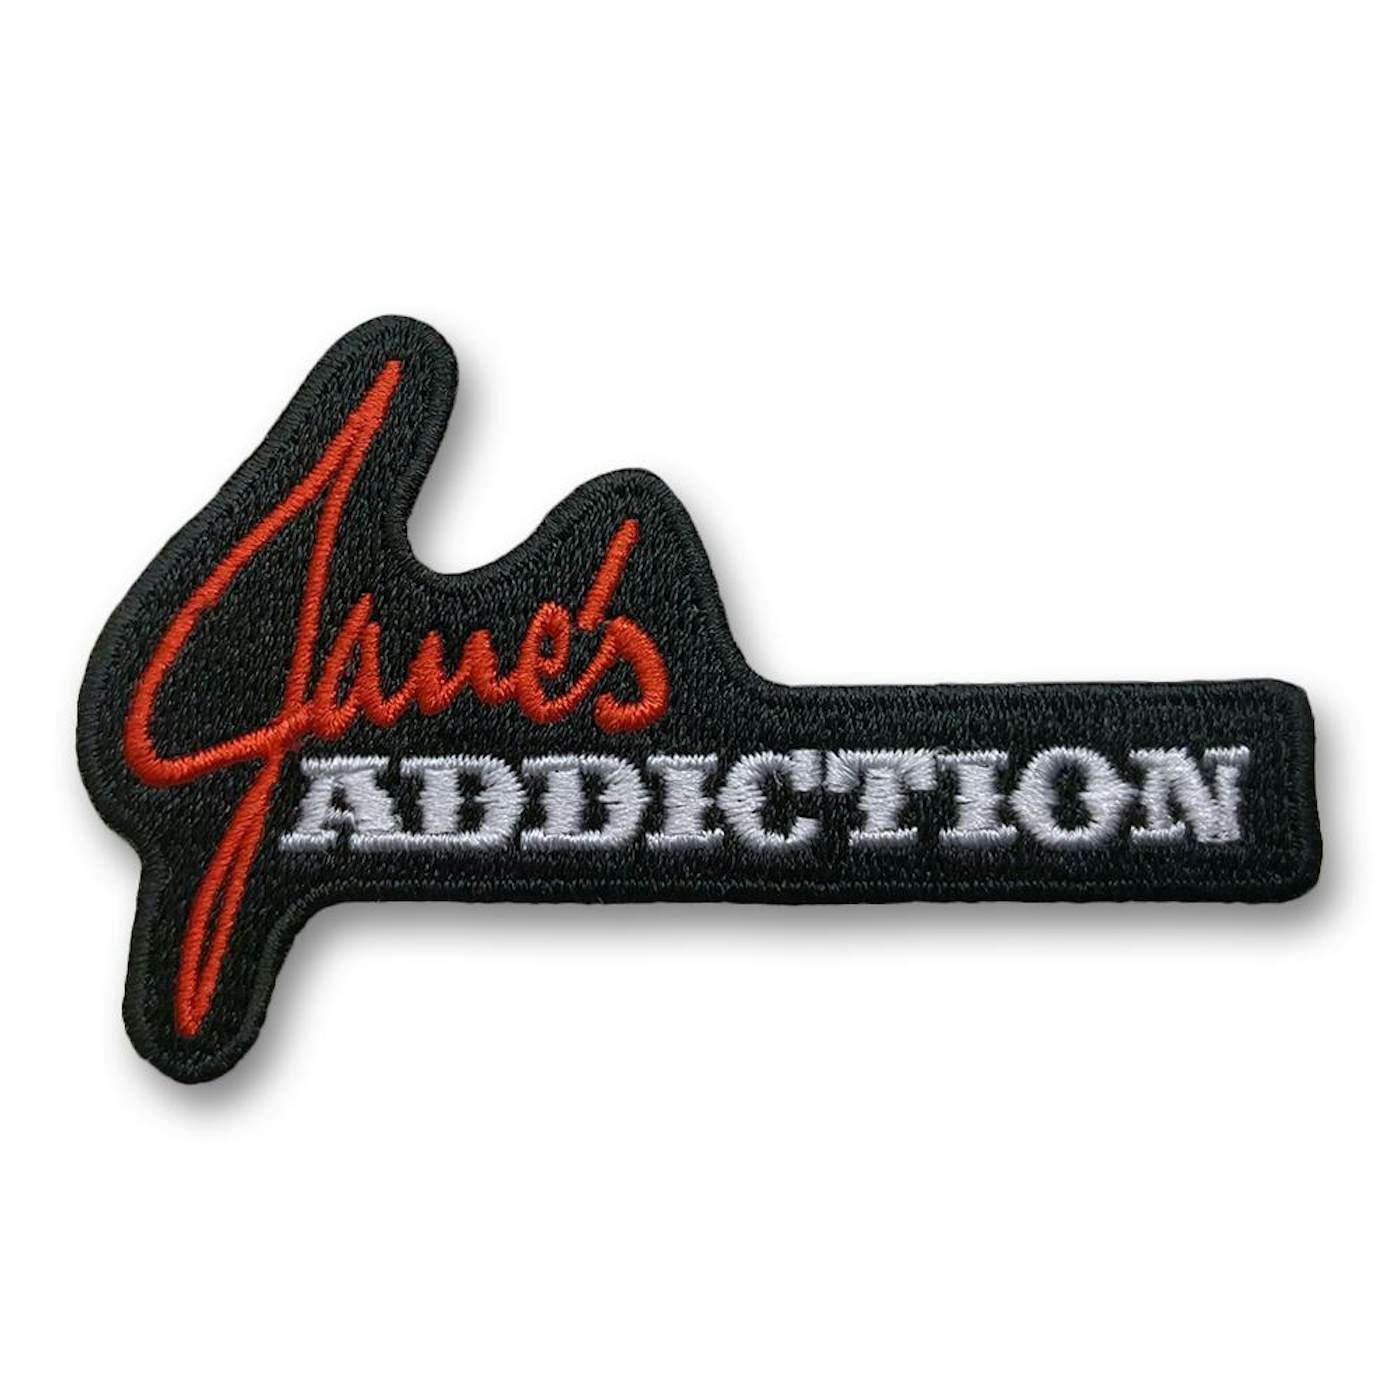 Jane's Addiction Logo Patch